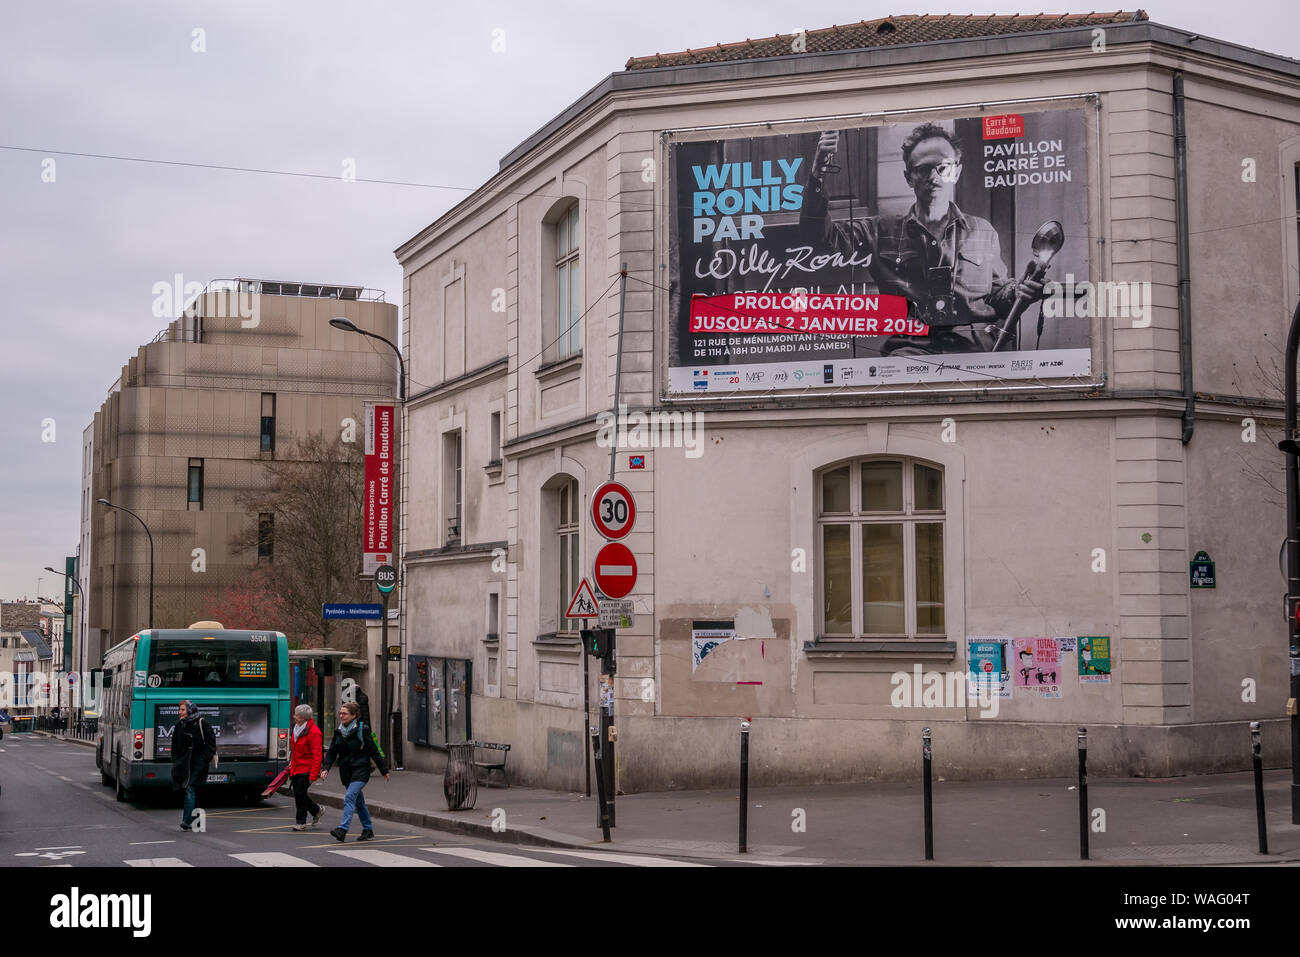 Paris, Frankreich, 15. Januar 2019: Carré de Baudouin Museumsgebäude Szene in Paris mit einem Bus und Personen außerhalb zu Fuß Stockfoto